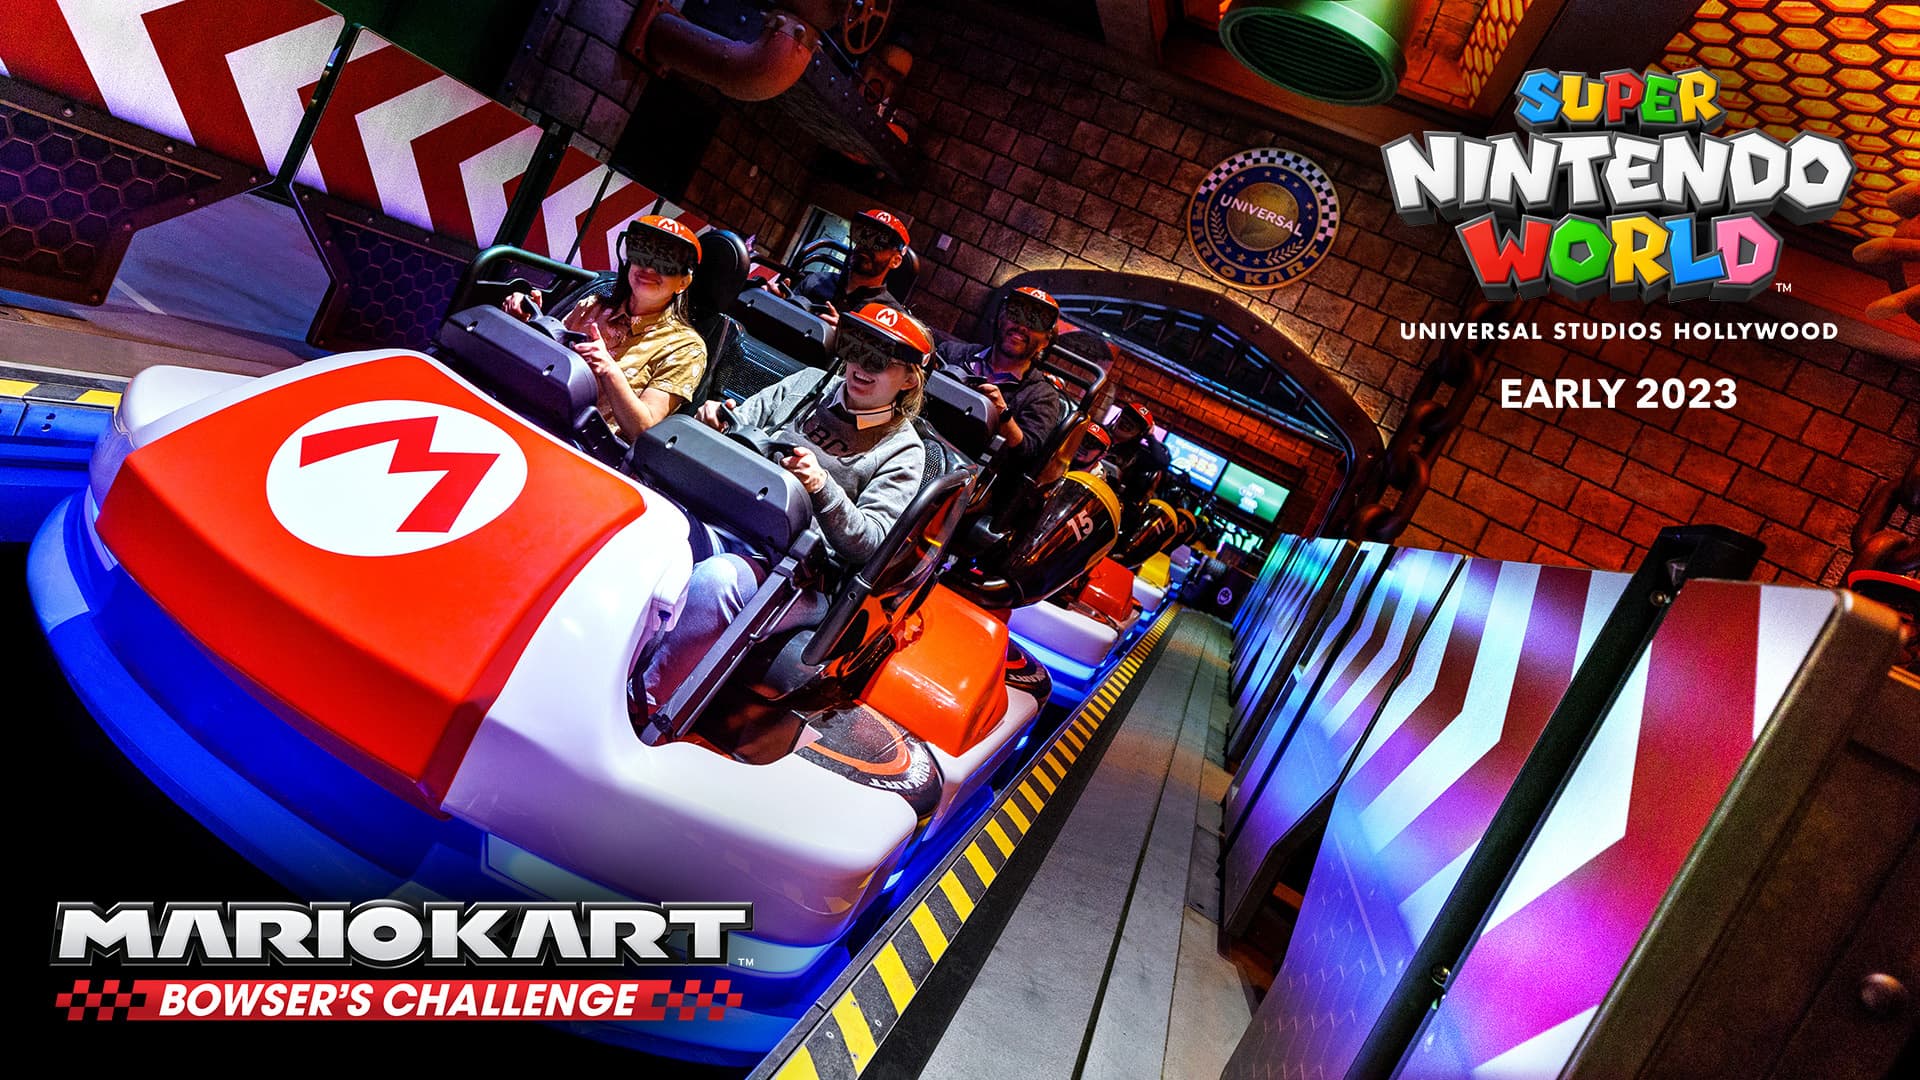 Universal Studios Hollywood Reveals Details of SUPER NINTENDO WORLD’s Signature Ride, “Mario Kart: Bowser’s Challenge”